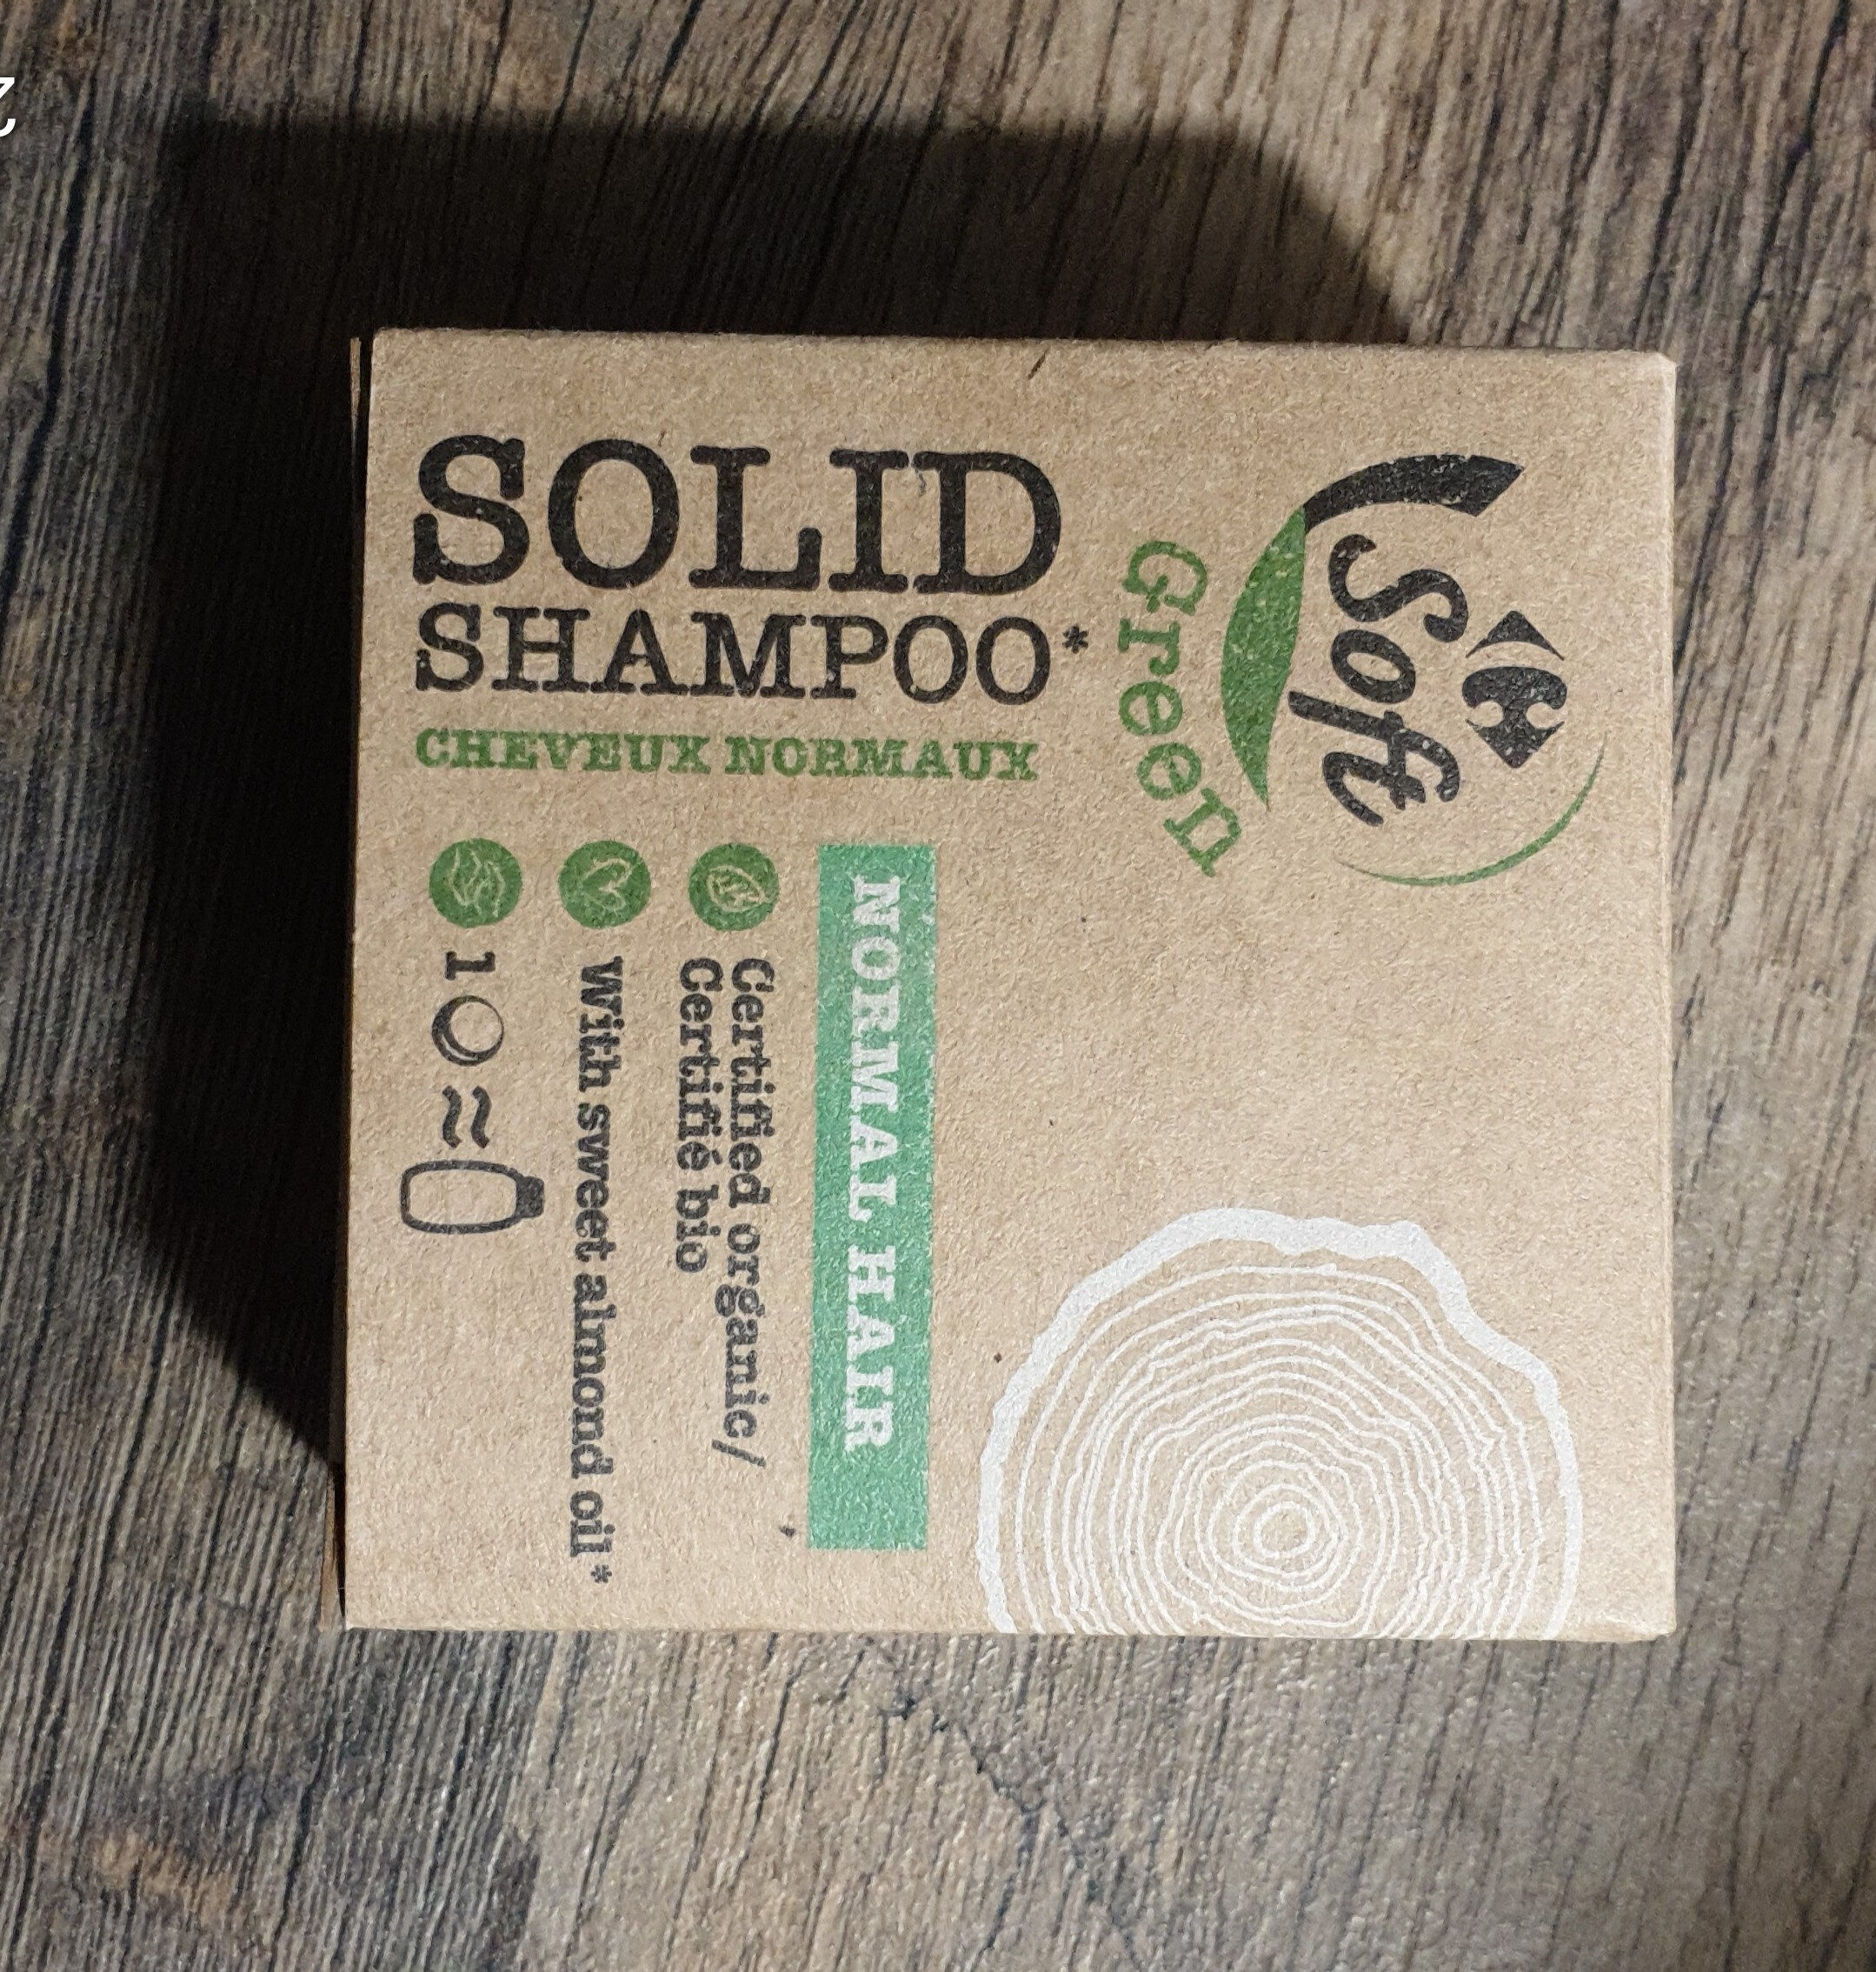 Solid SHAMPOO cheveux normaux - Продукт - fr